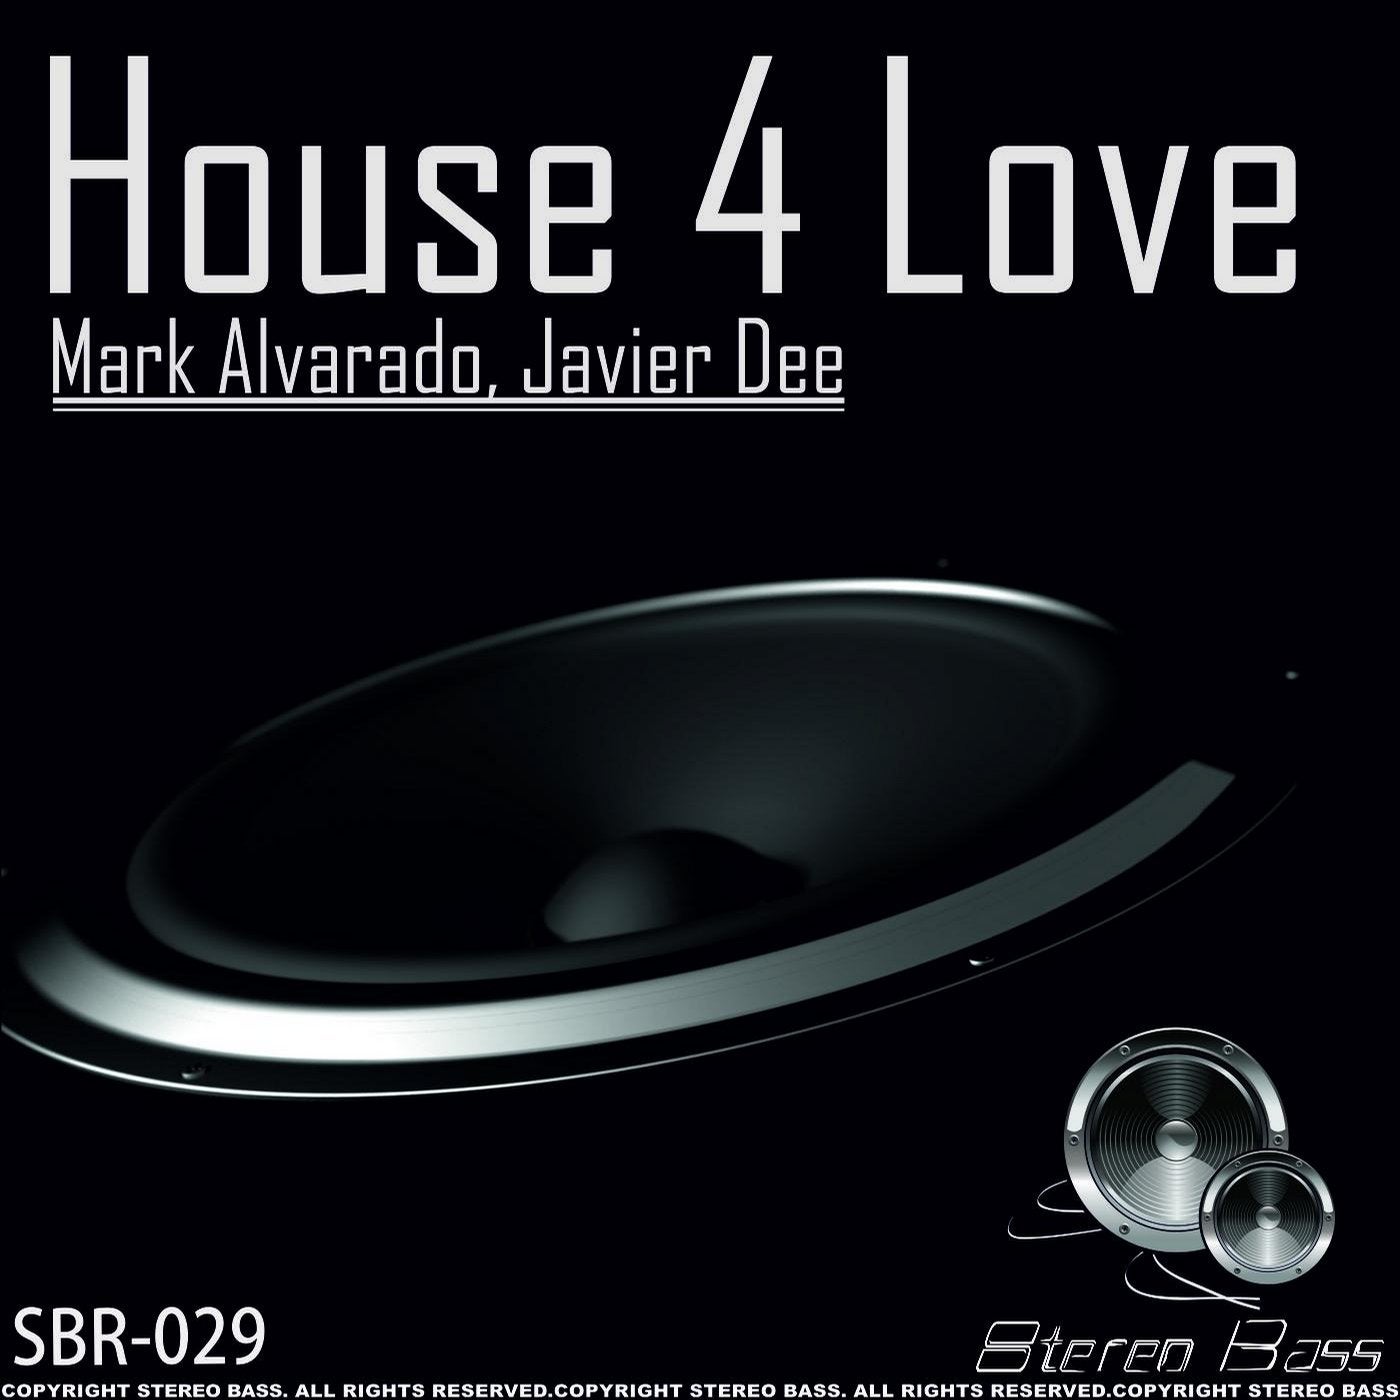 House 4 Love